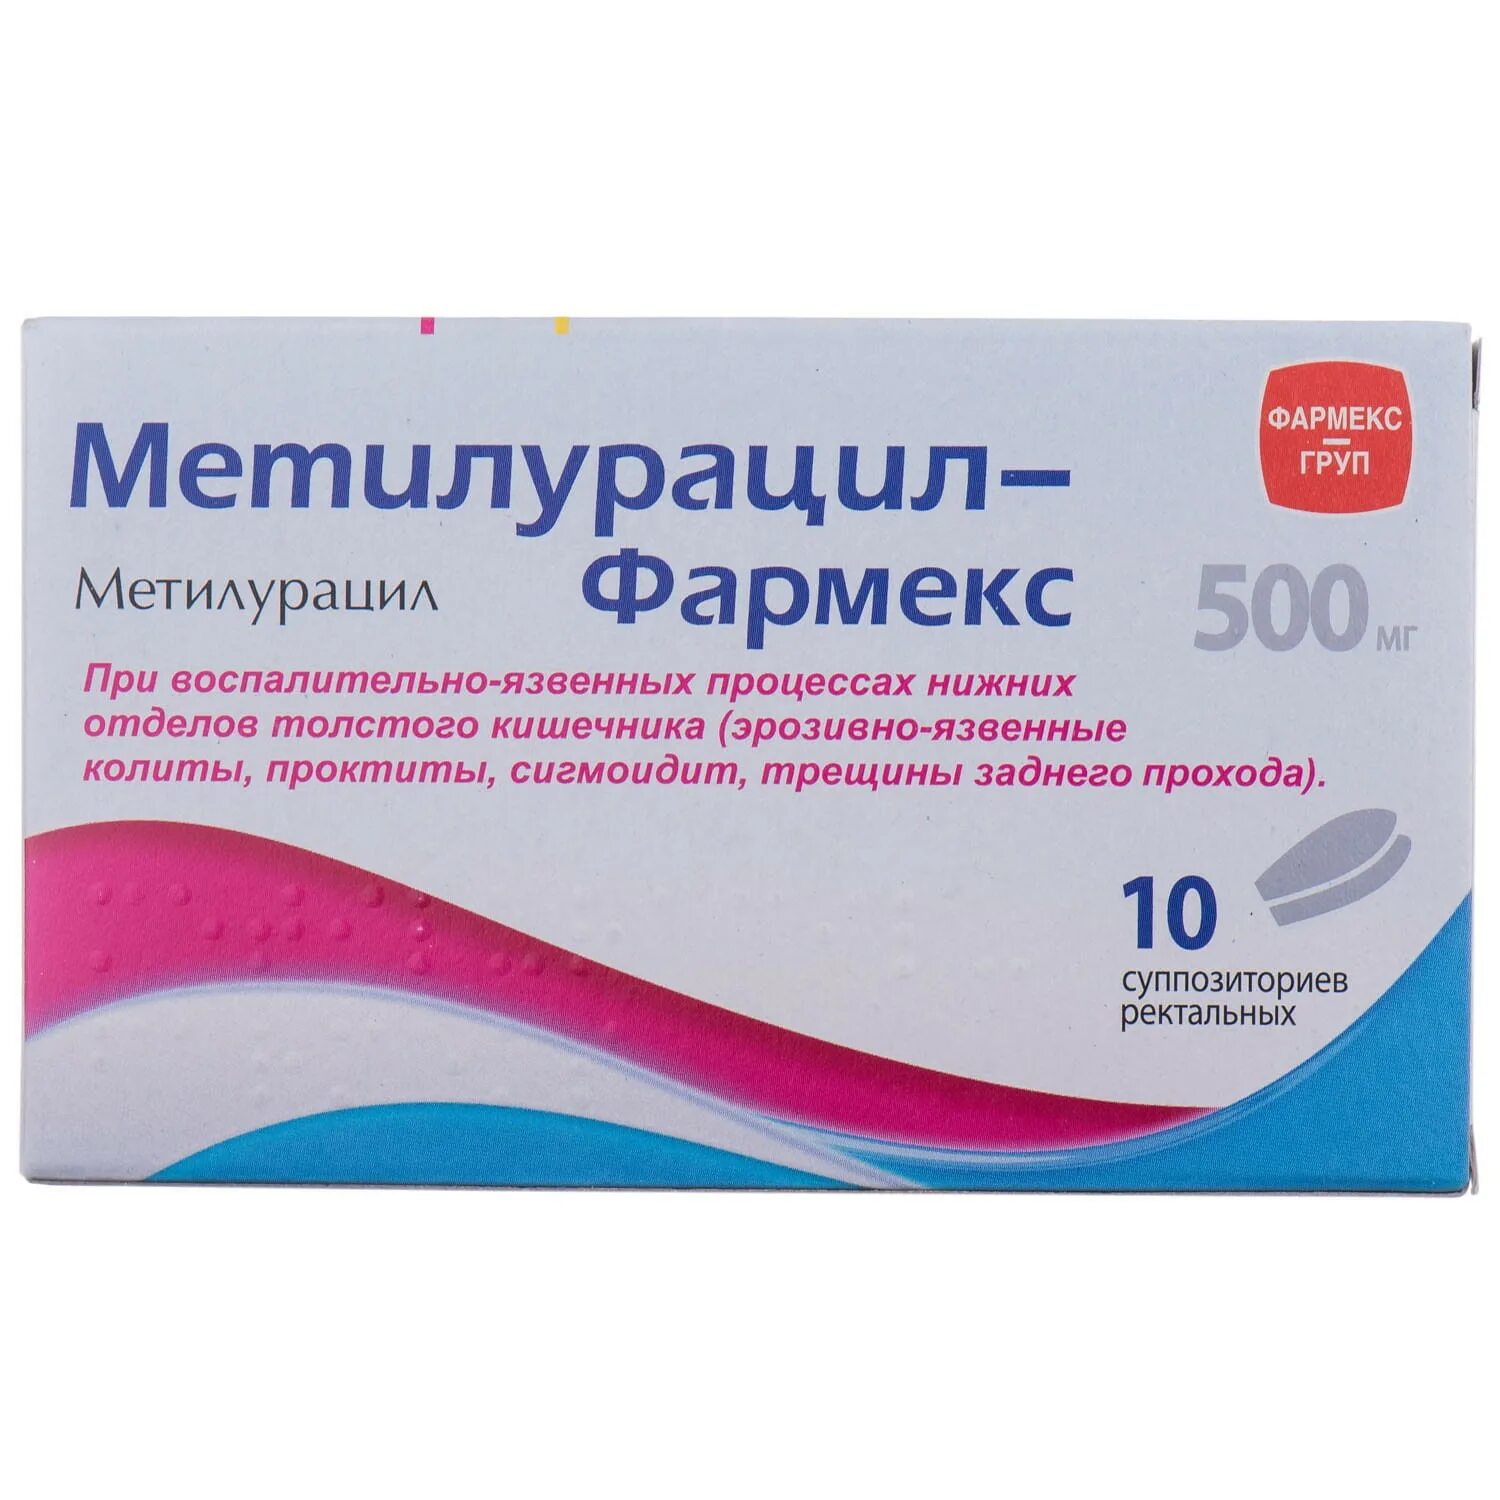 Метилурацил свечи 500 мг. Метилурацил суппозитории ректальные 500 мг. Фармекс. Метилурацил с мирамистином.